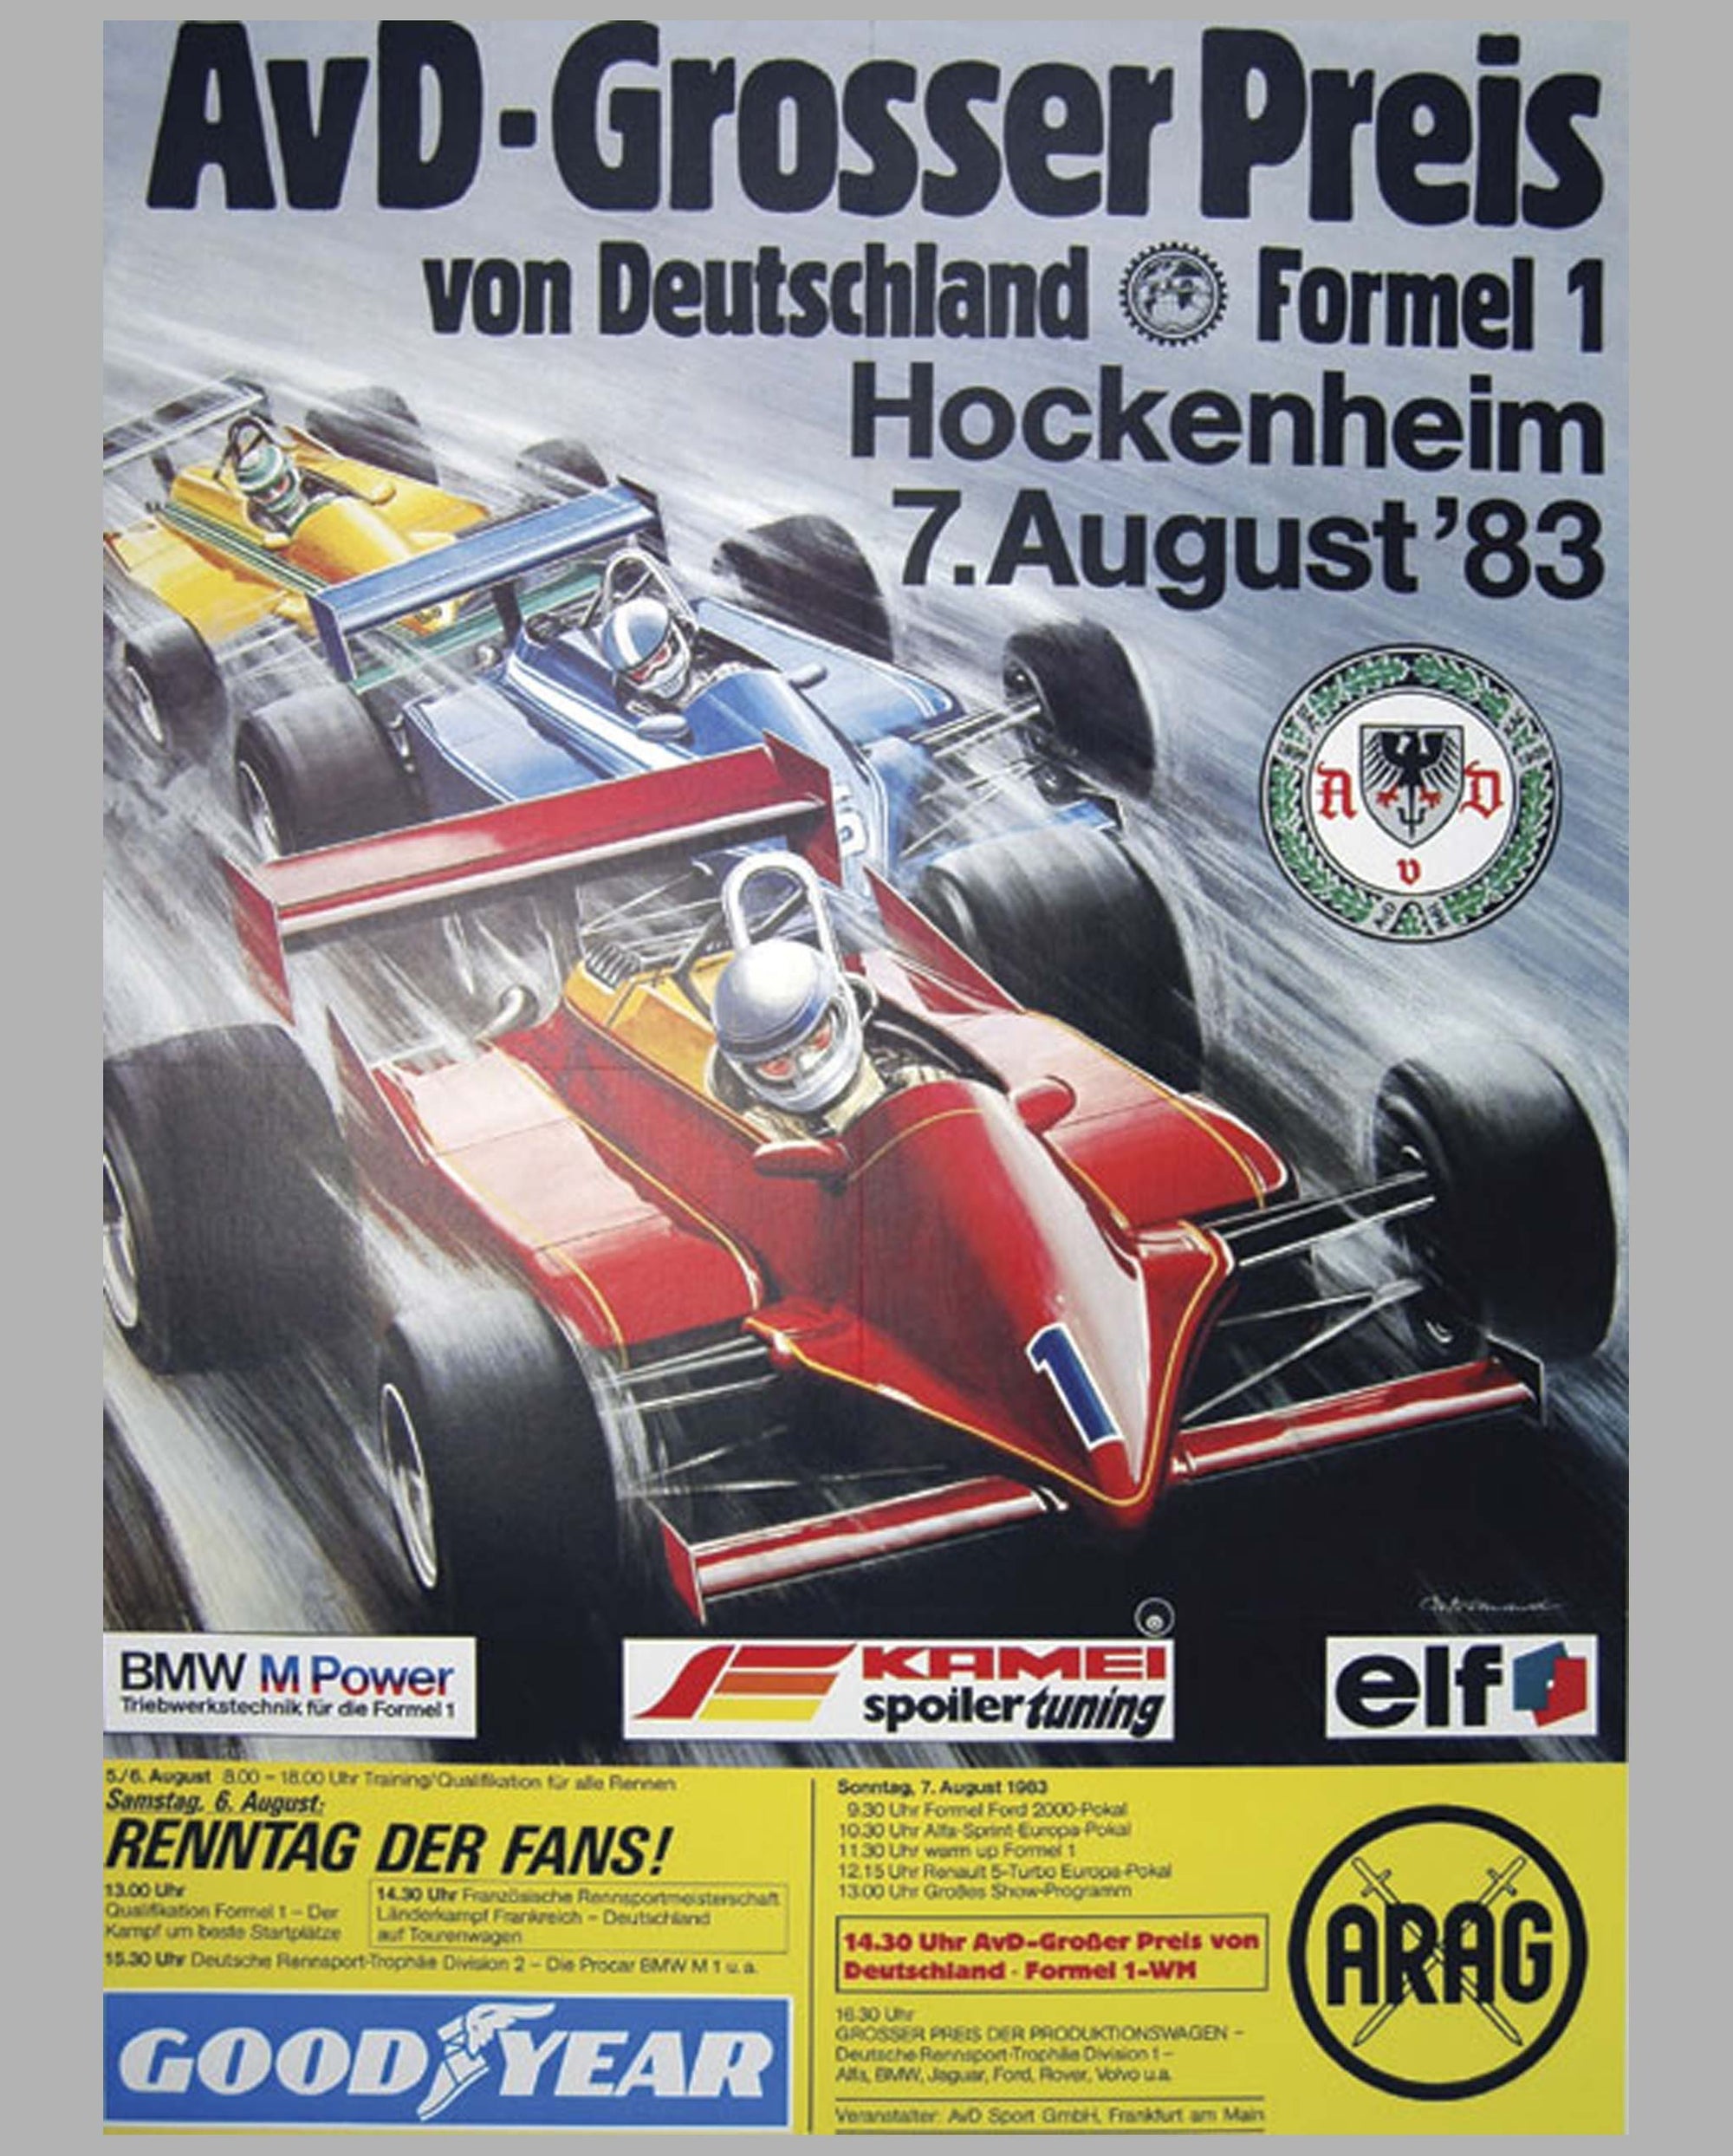 GP of Germany - Hockenheim 1983 poster by Carlo Demand